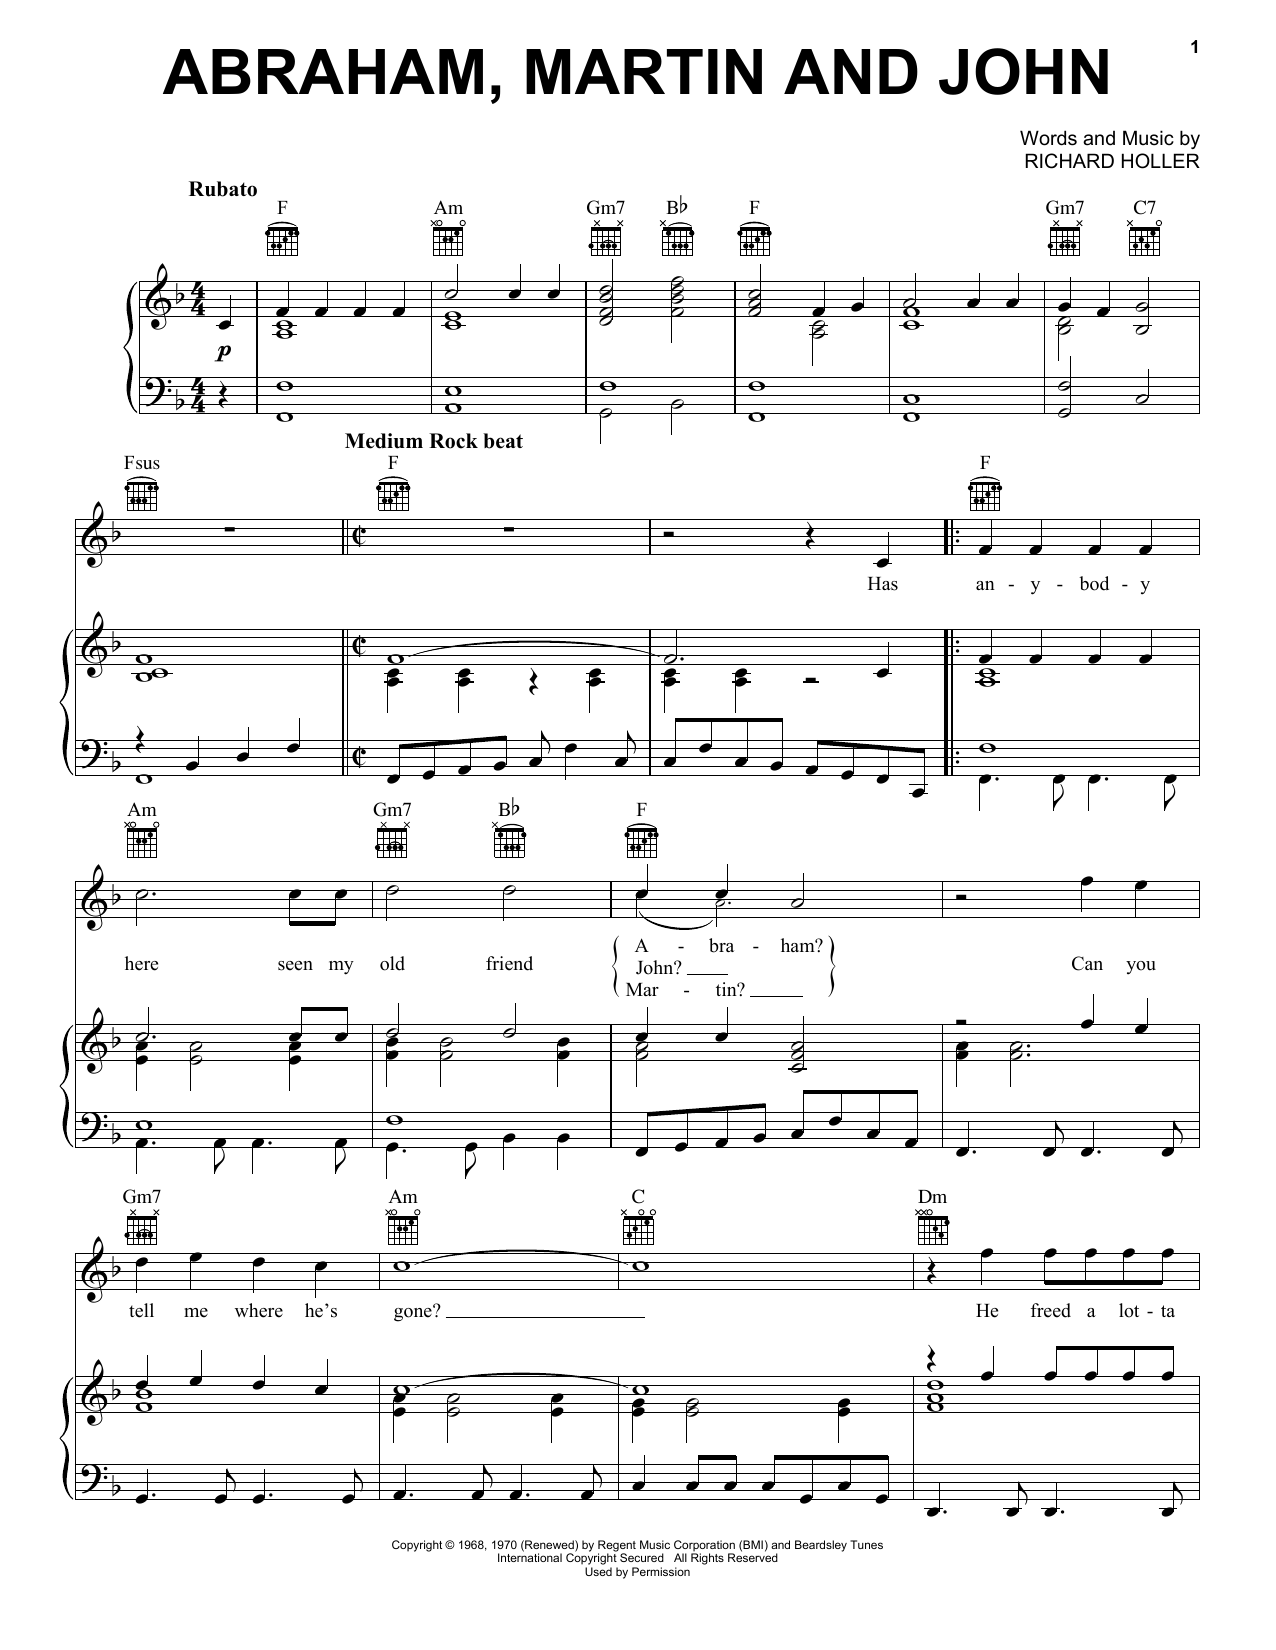 Richard Holler Abraham, Martin And John Sheet Music Notes & Chords for Melody Line, Lyrics & Chords - Download or Print PDF